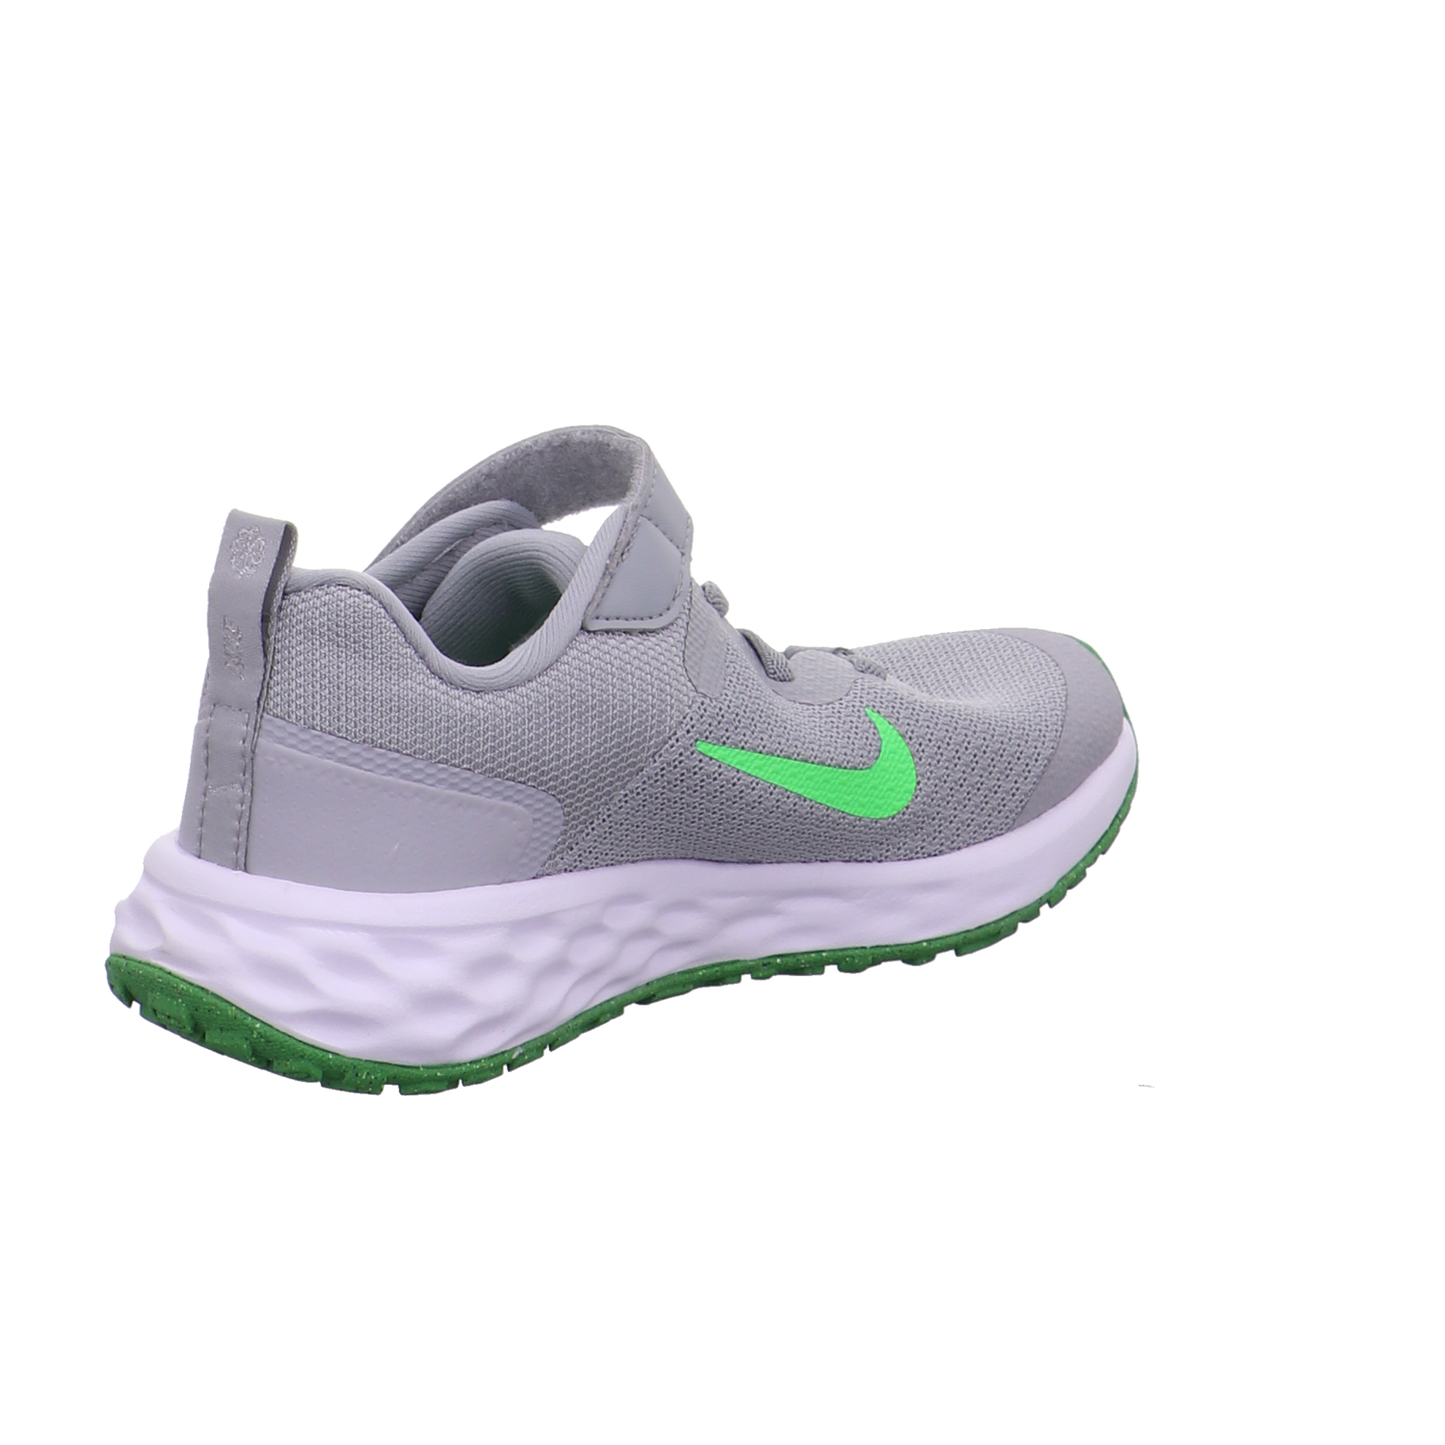 Nike Krabbel- und Lauflernschuhe grau kombi Bild5